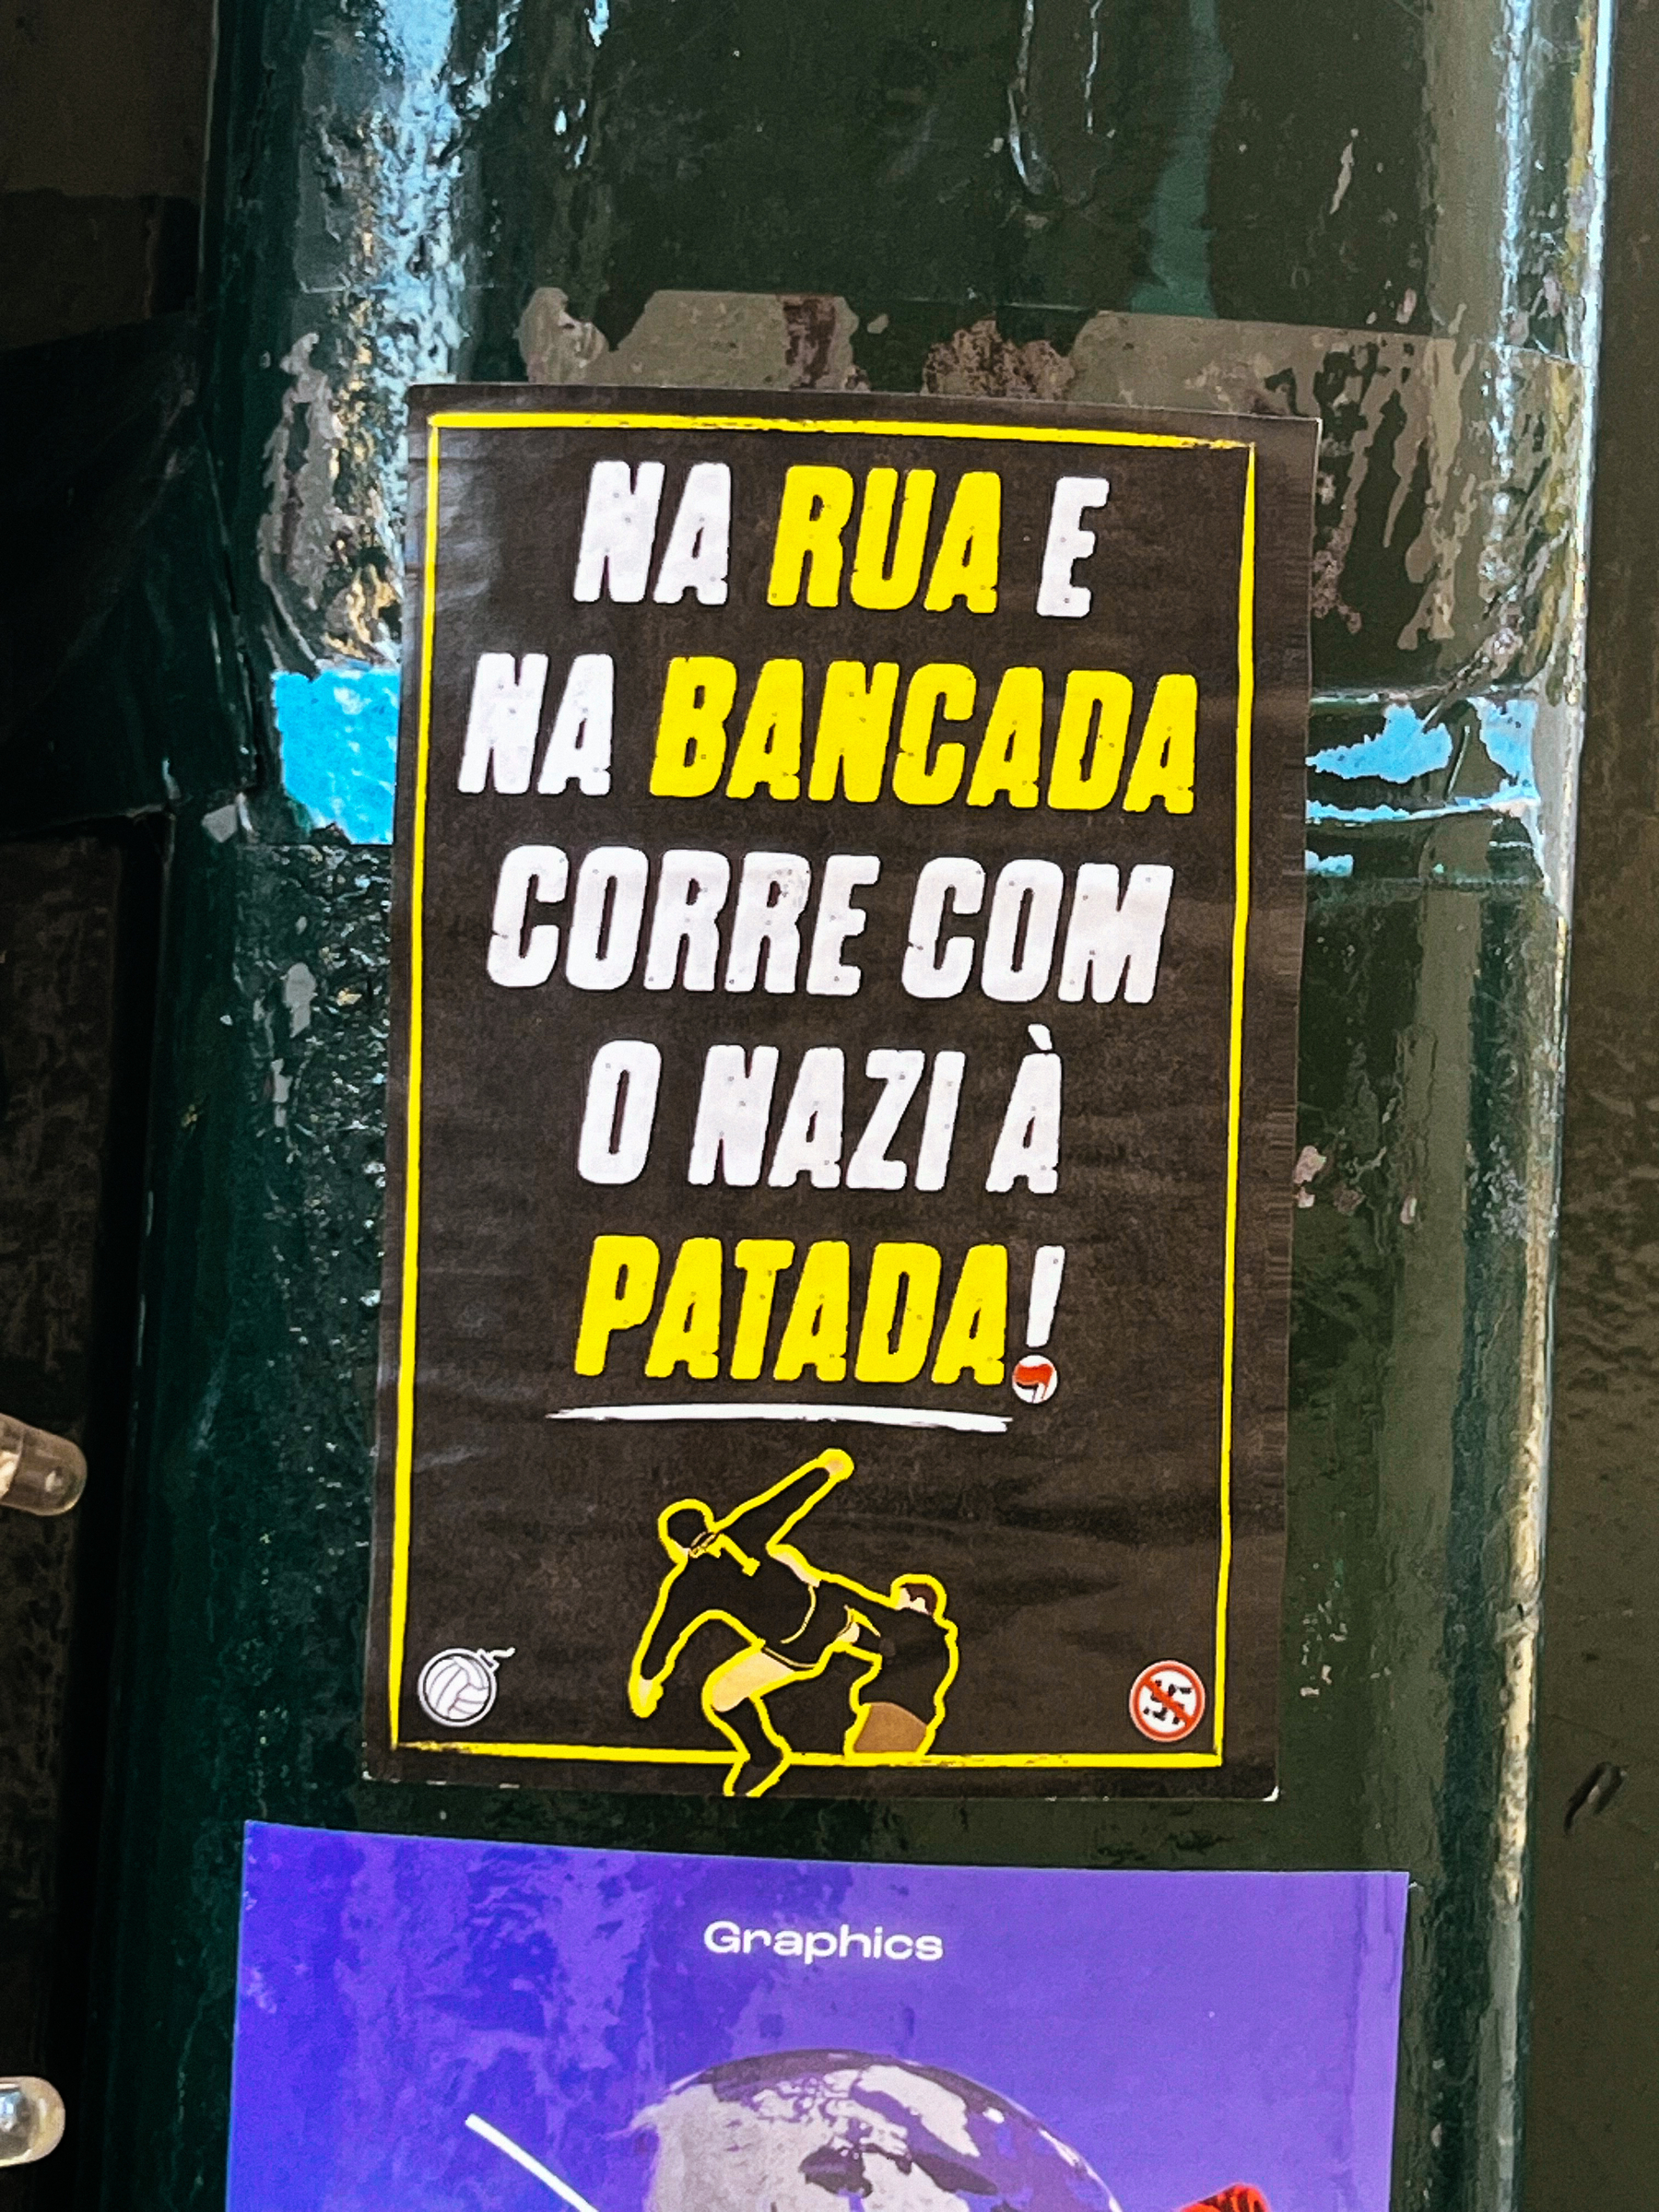 A yellow and black sticker on a pole depicts a figure kicking another figure, with text &ldquo;NA RUA E NA BANCADA CORRE COM O NAZI À PATADA!&rdquo; indicating an anti-fascist message.